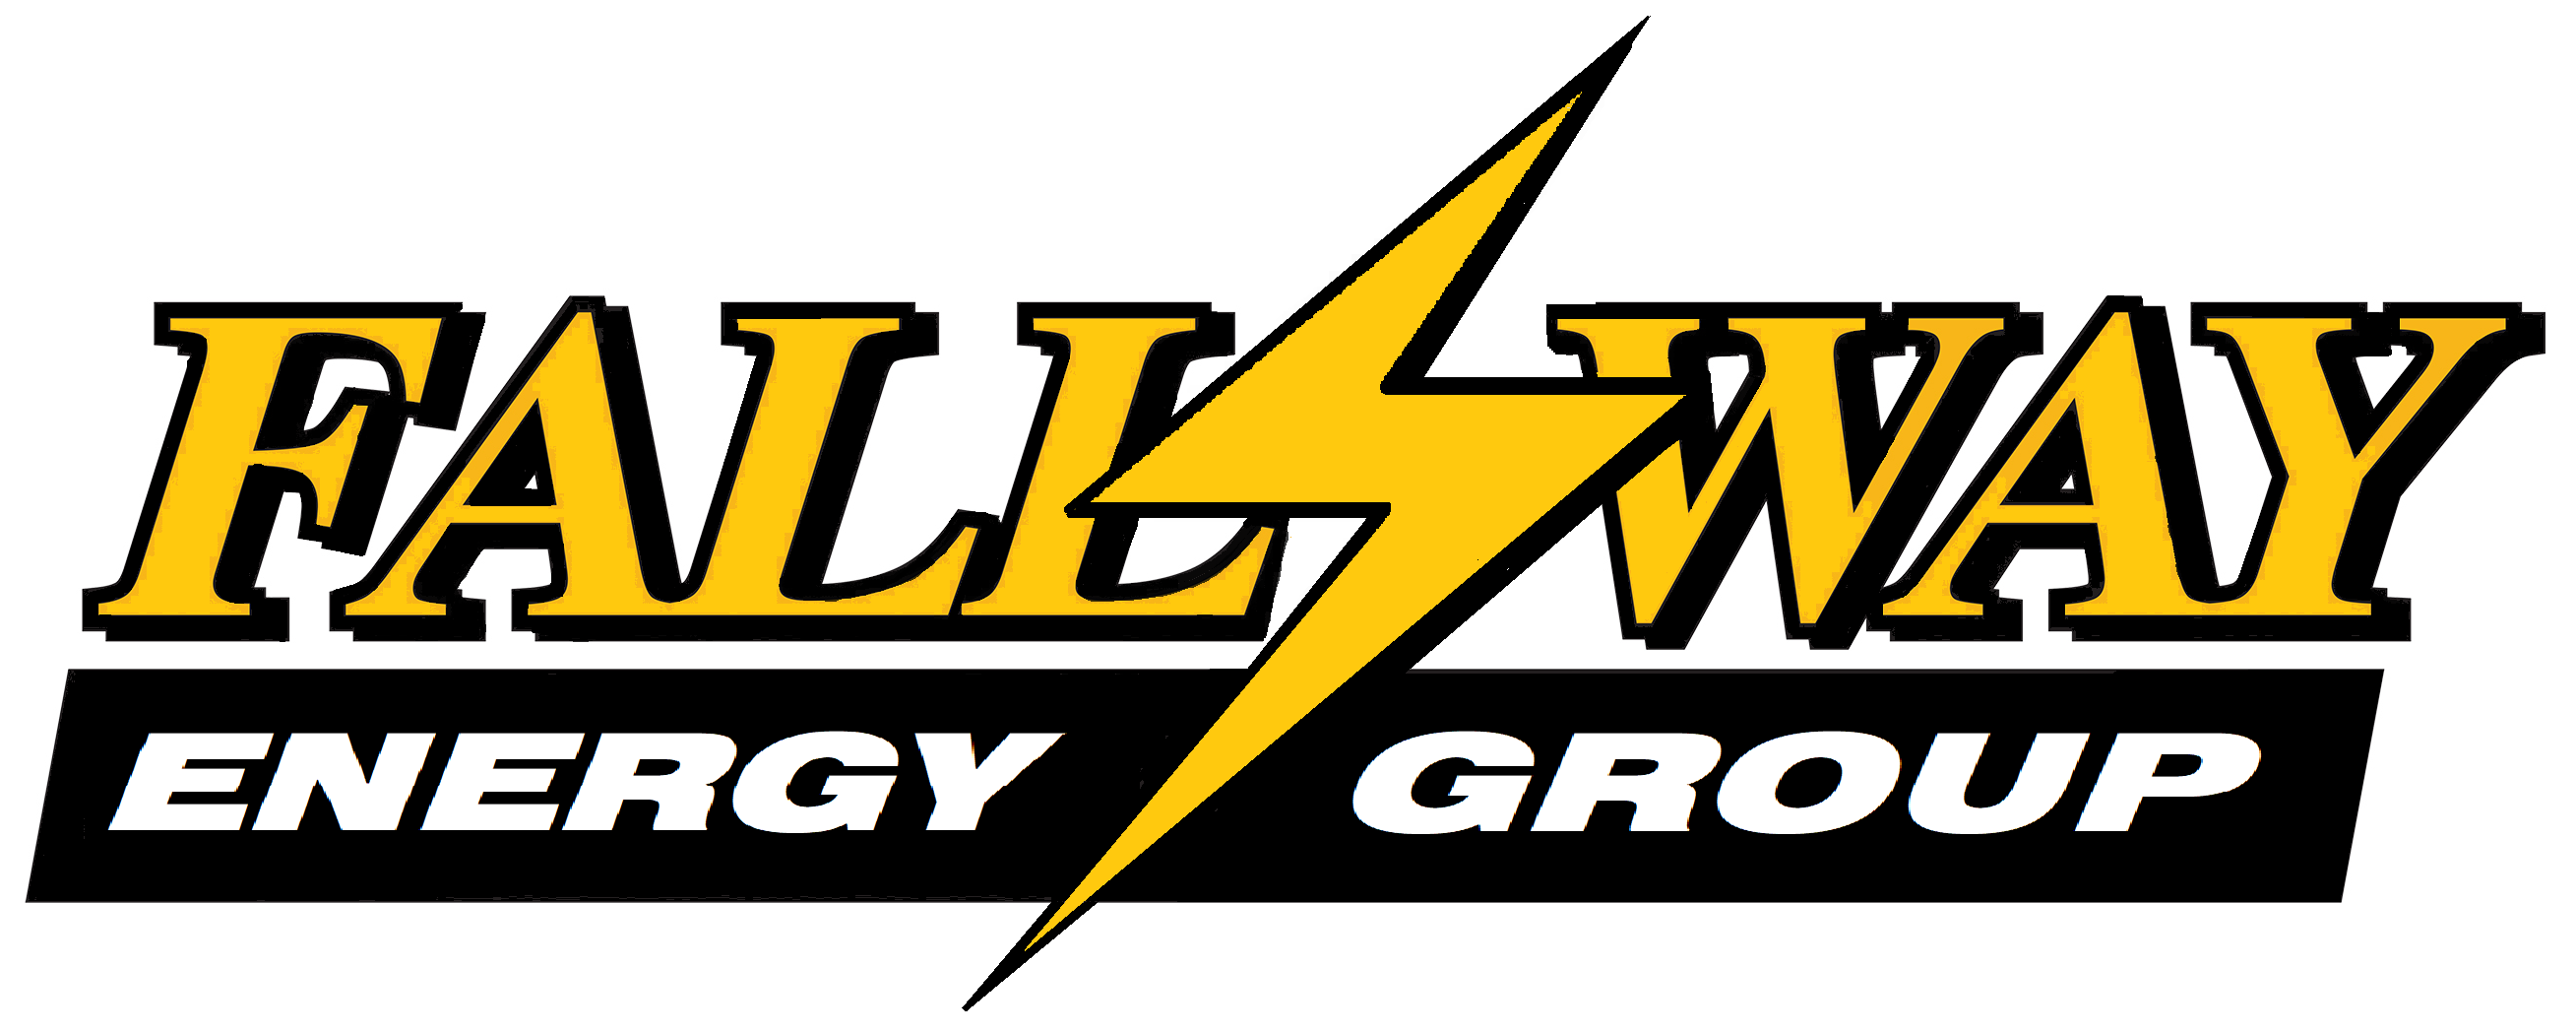 Fallsway Battery Logo V2-1